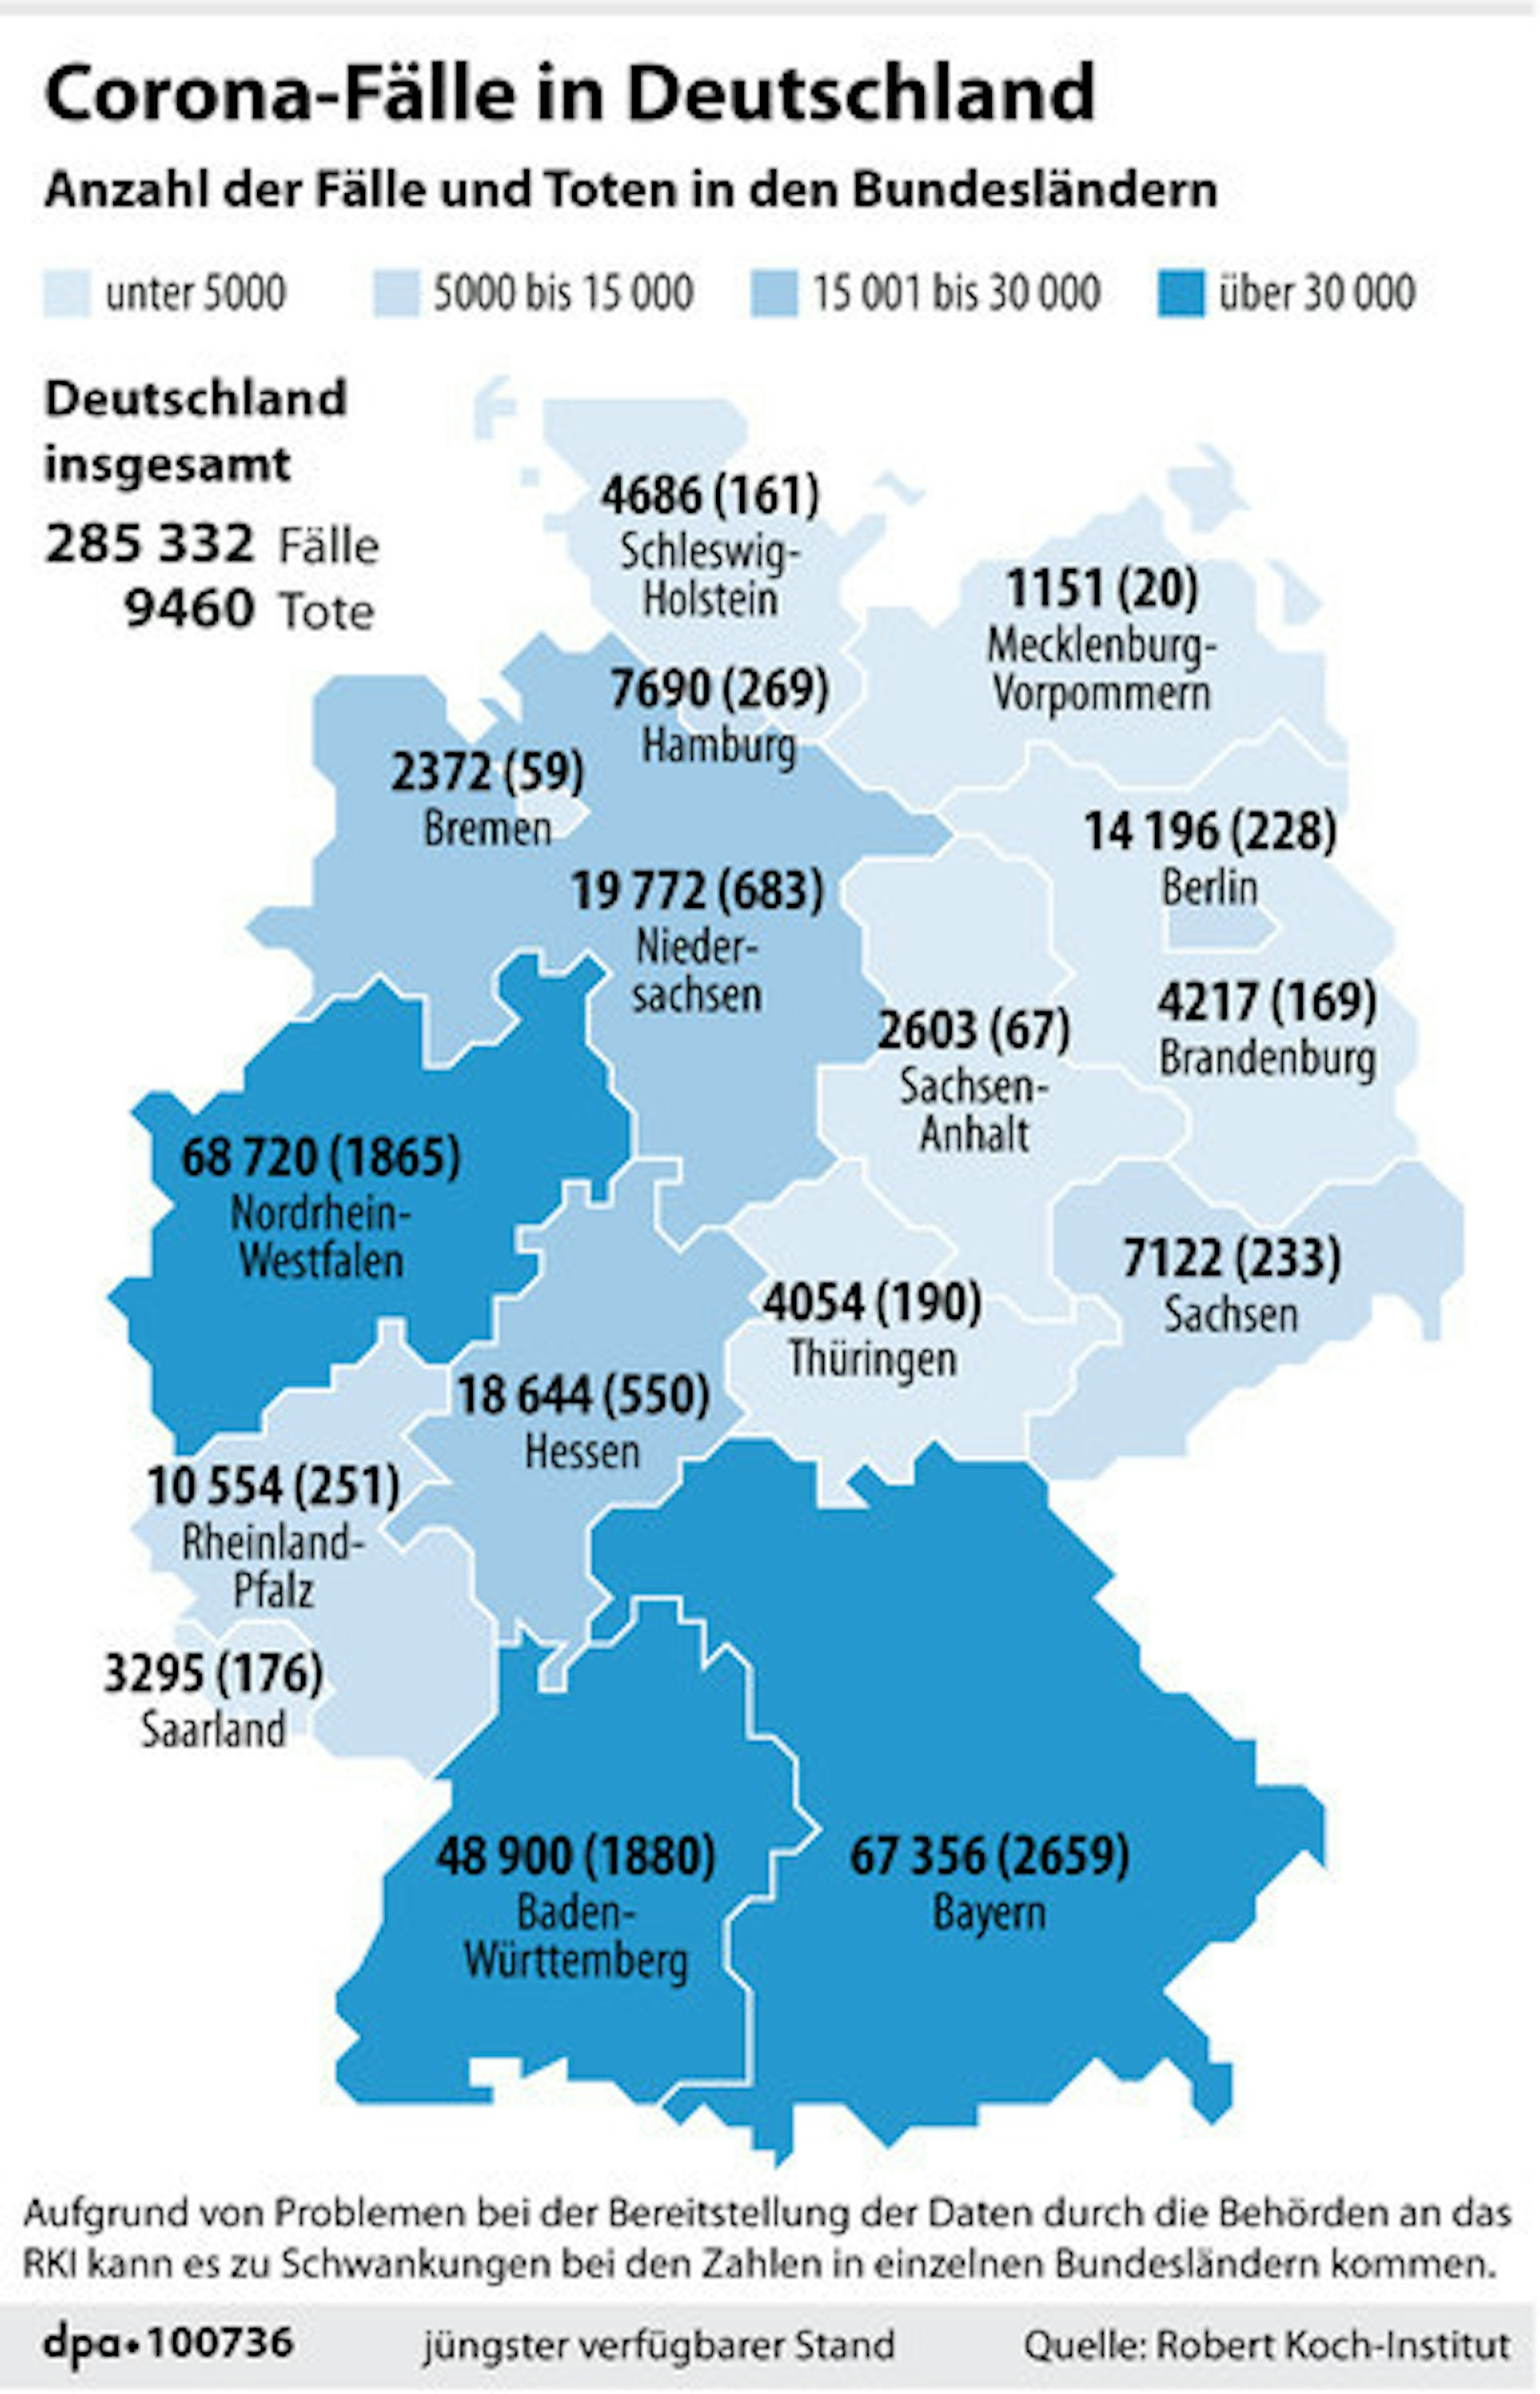 Corona-Fälle in Deutschland (Stand: 28.09.2020)